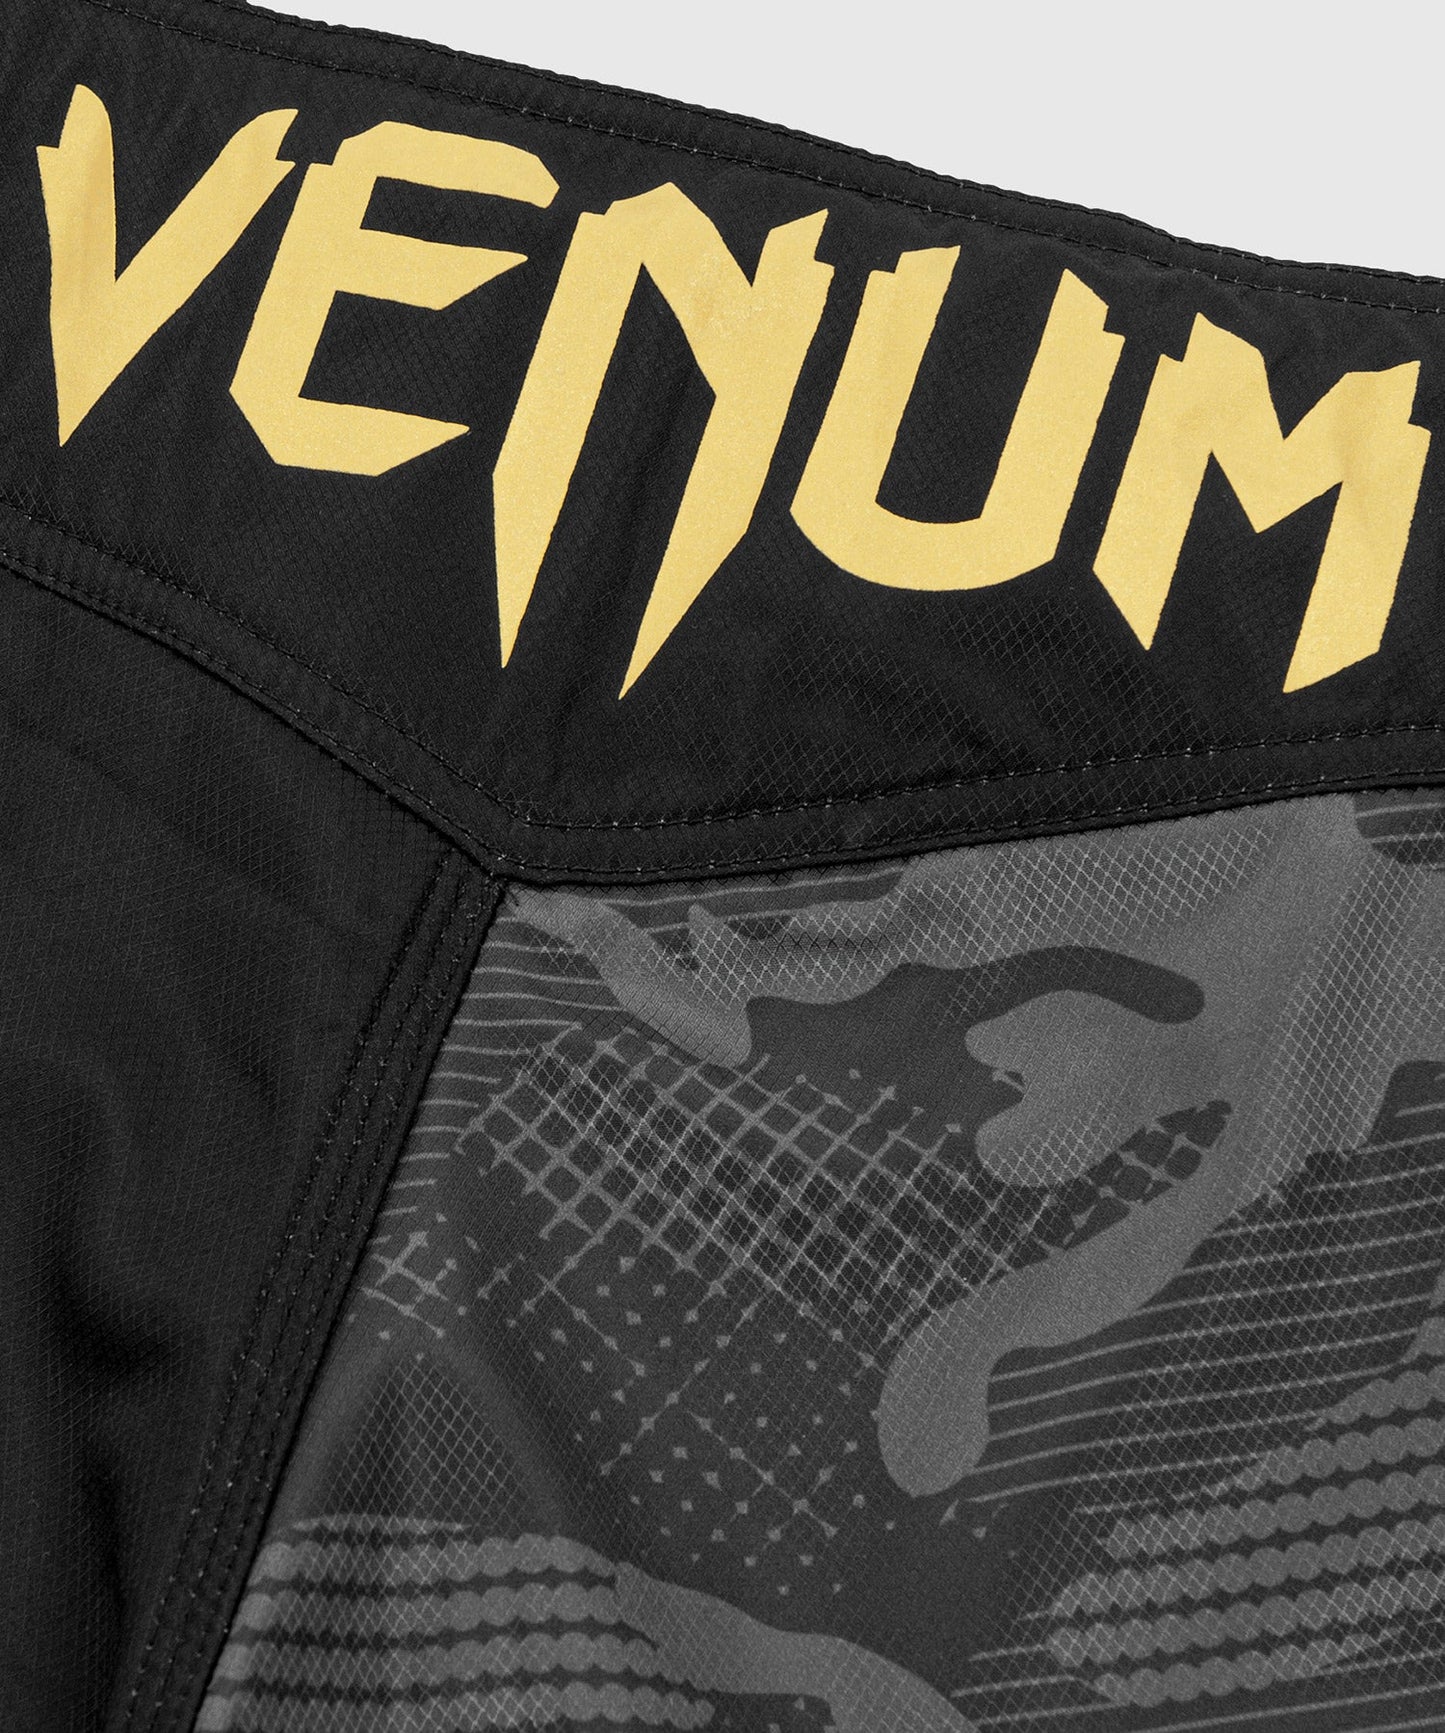 Venum Light 3.0 Fightshorts - Gold/Black